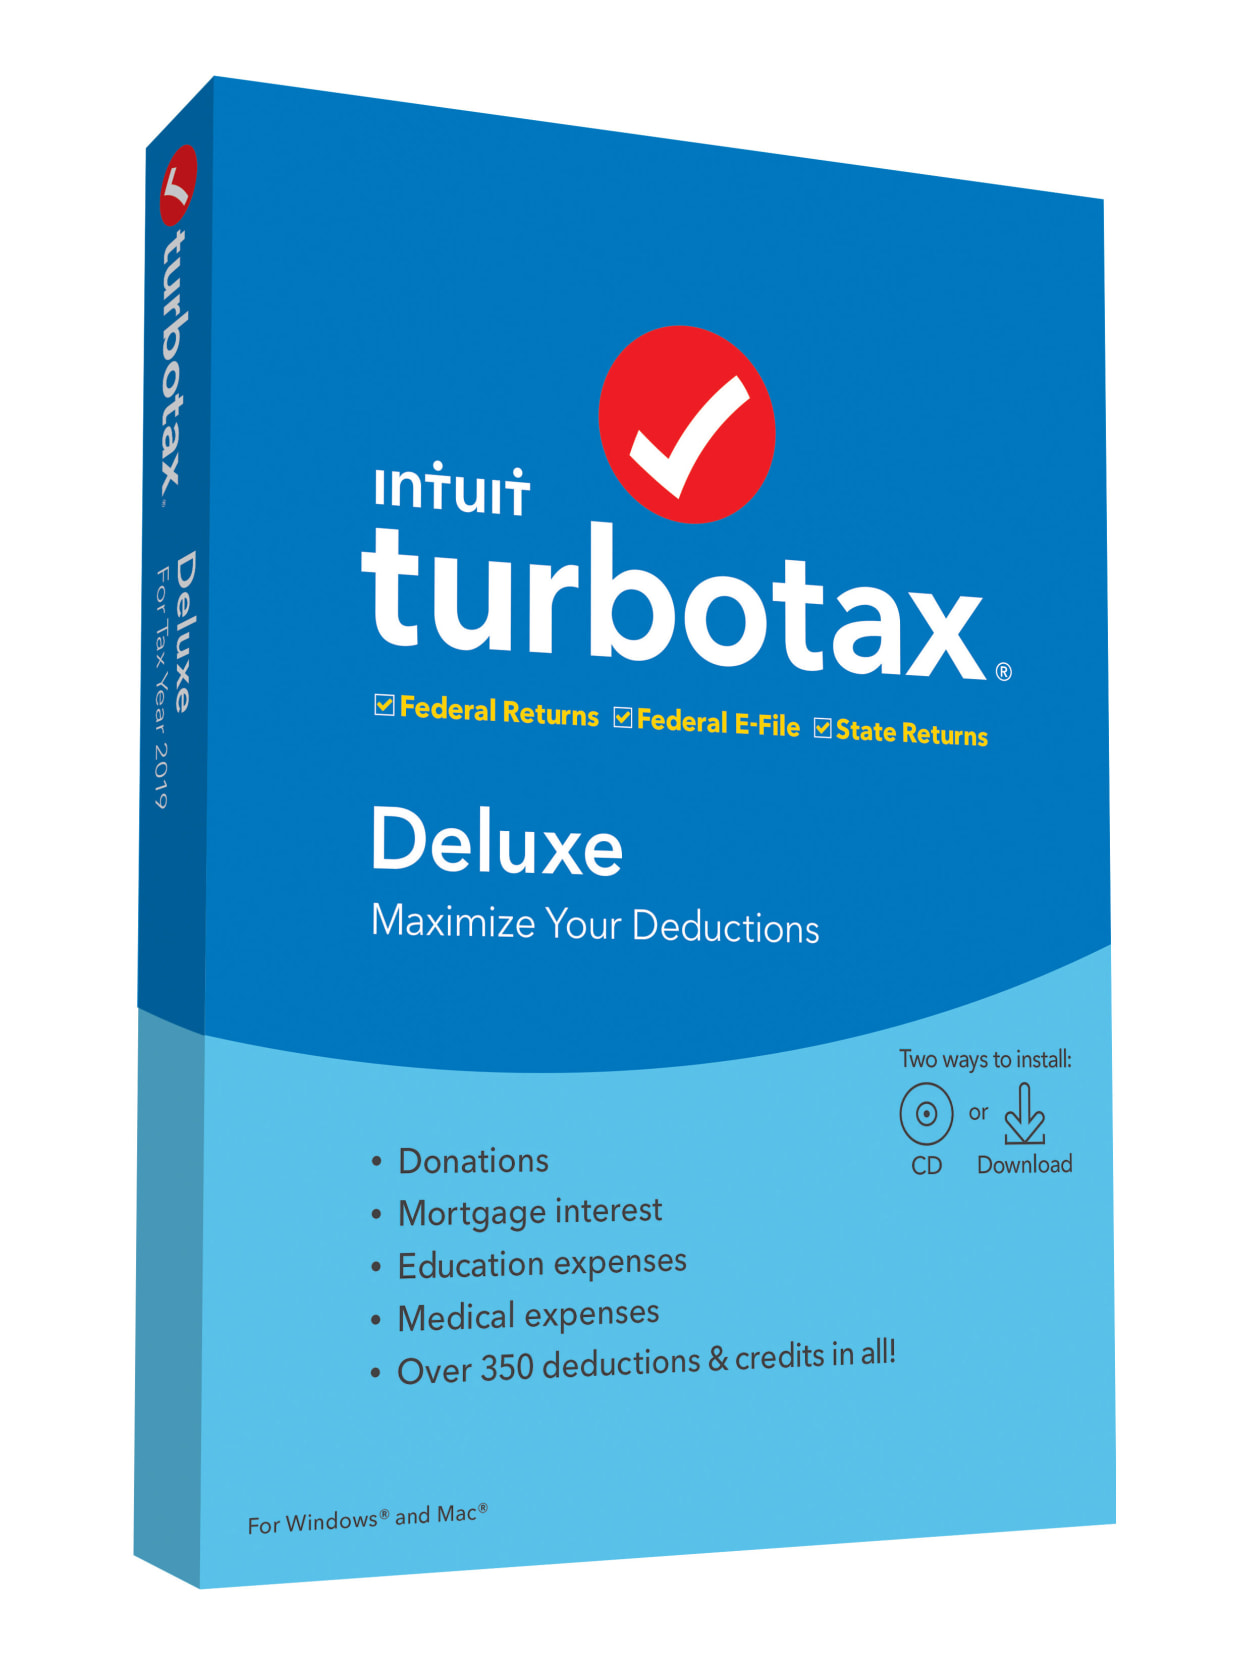 Turbotax 2019 Activation Code